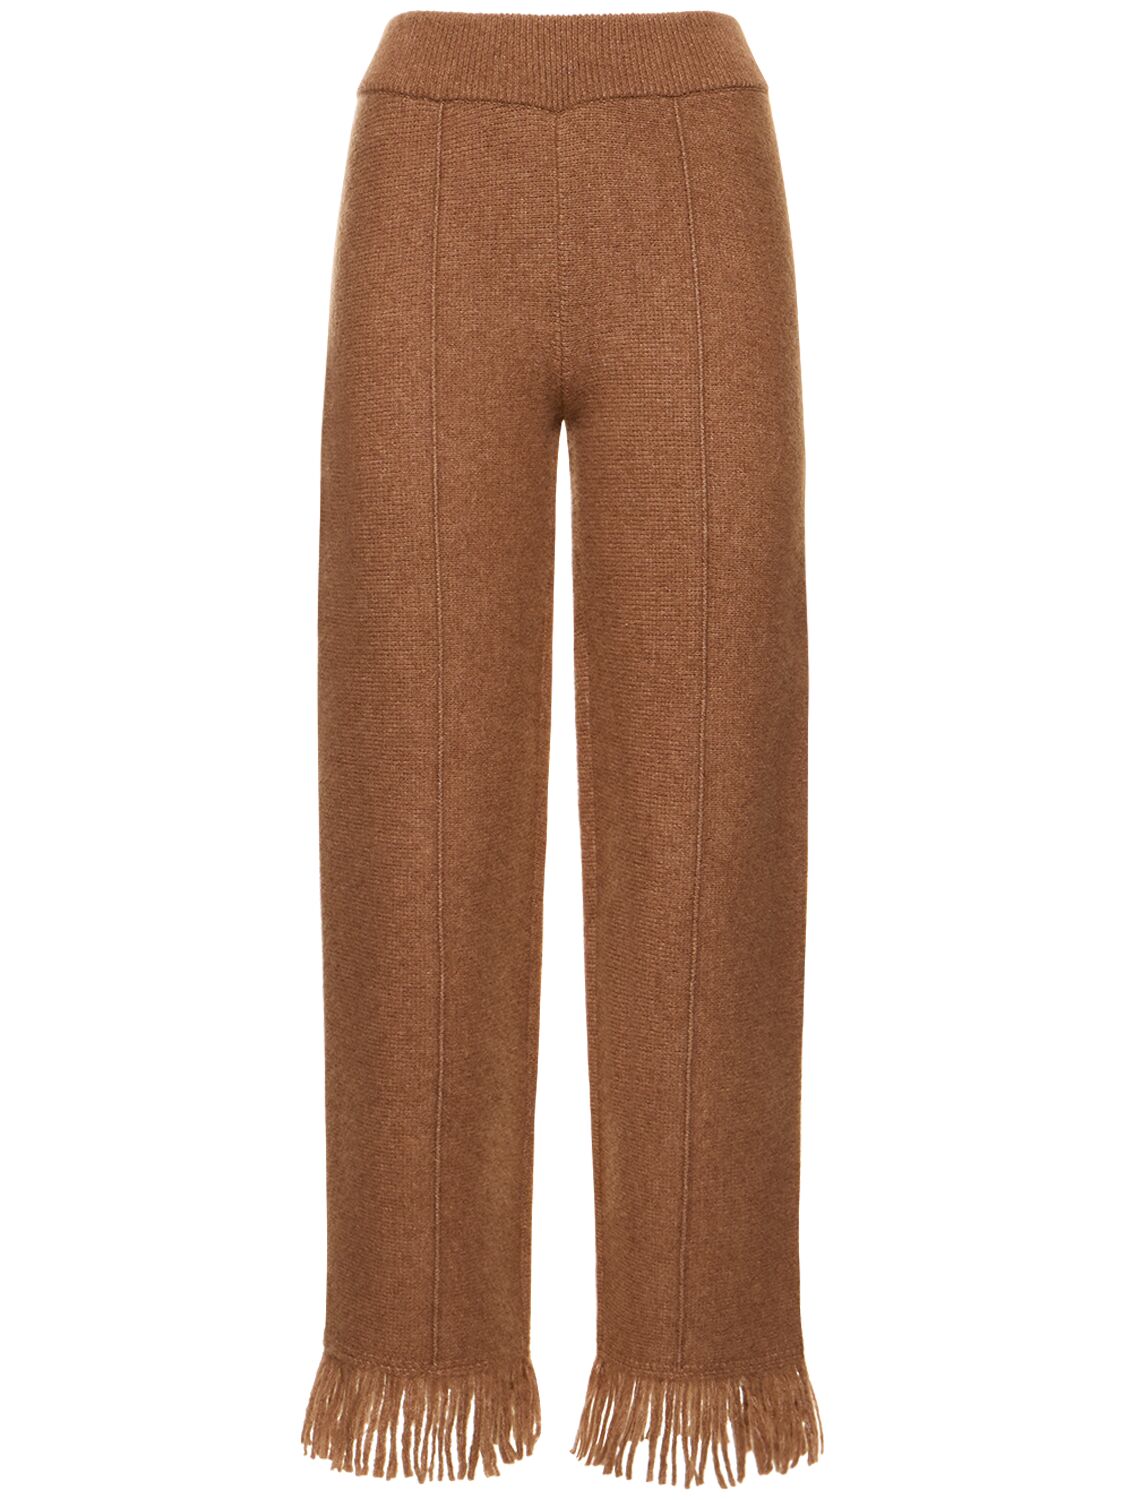 Image of A Finest Cashmere Blend Pants